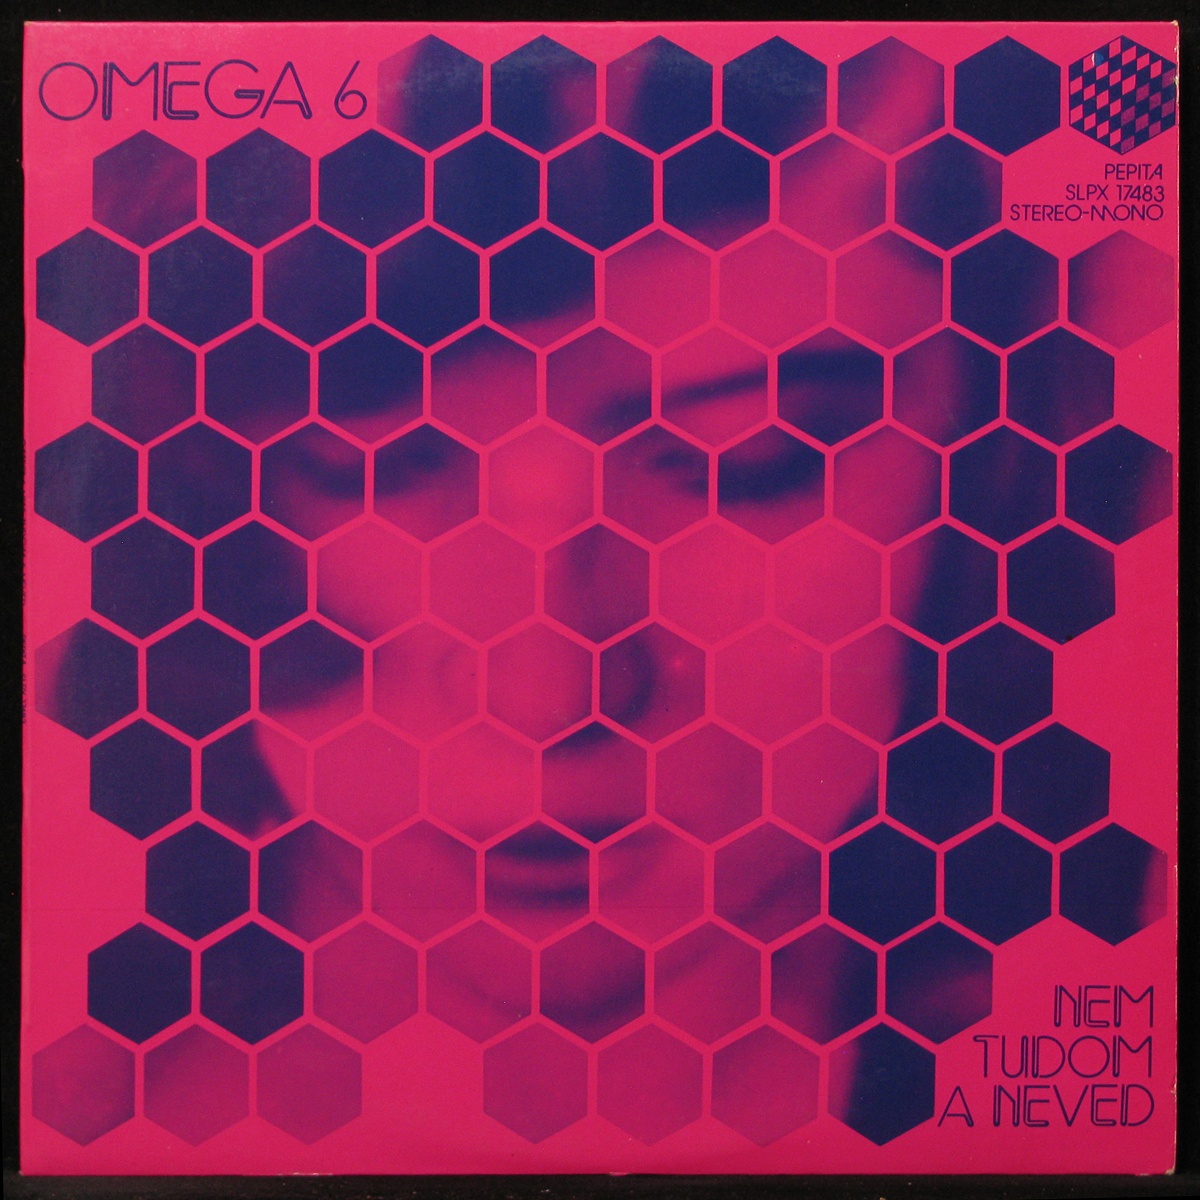 LP Omega — Omega 6 - Nem Tudom A Neved (export version) фото